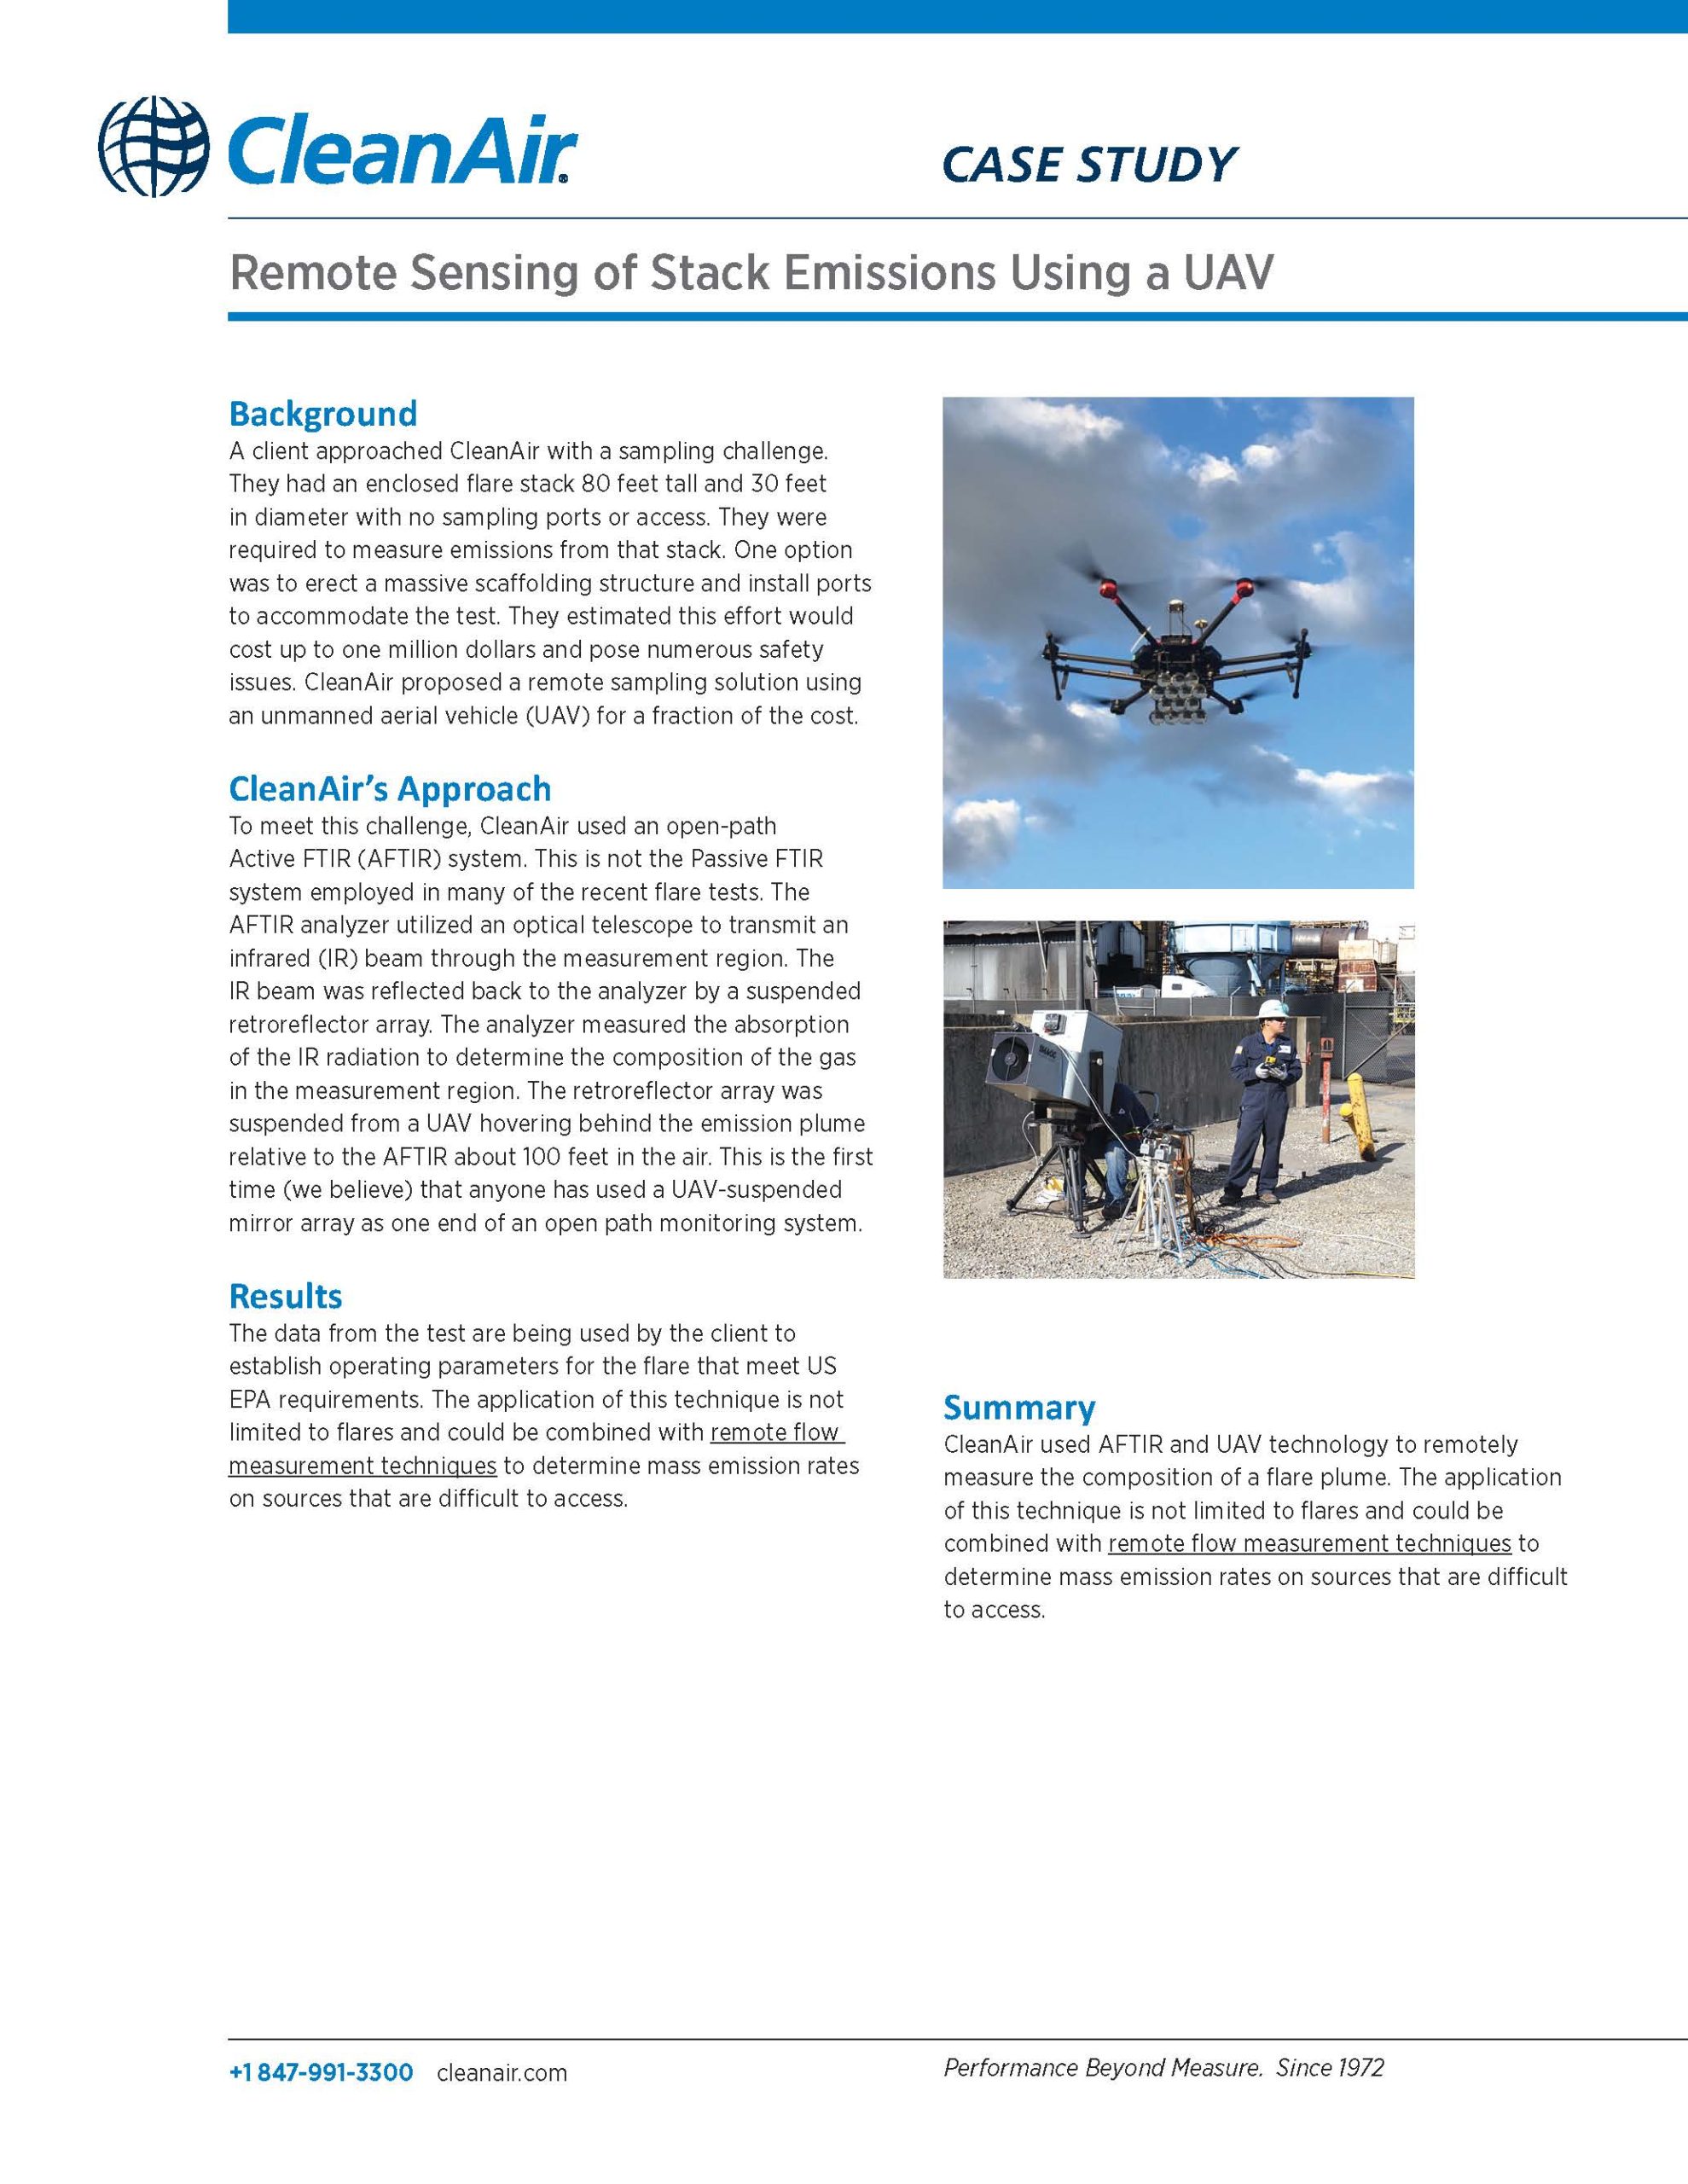 Remote-Sensing-of-Stack-Emissions-Using-a-UAV-thumb